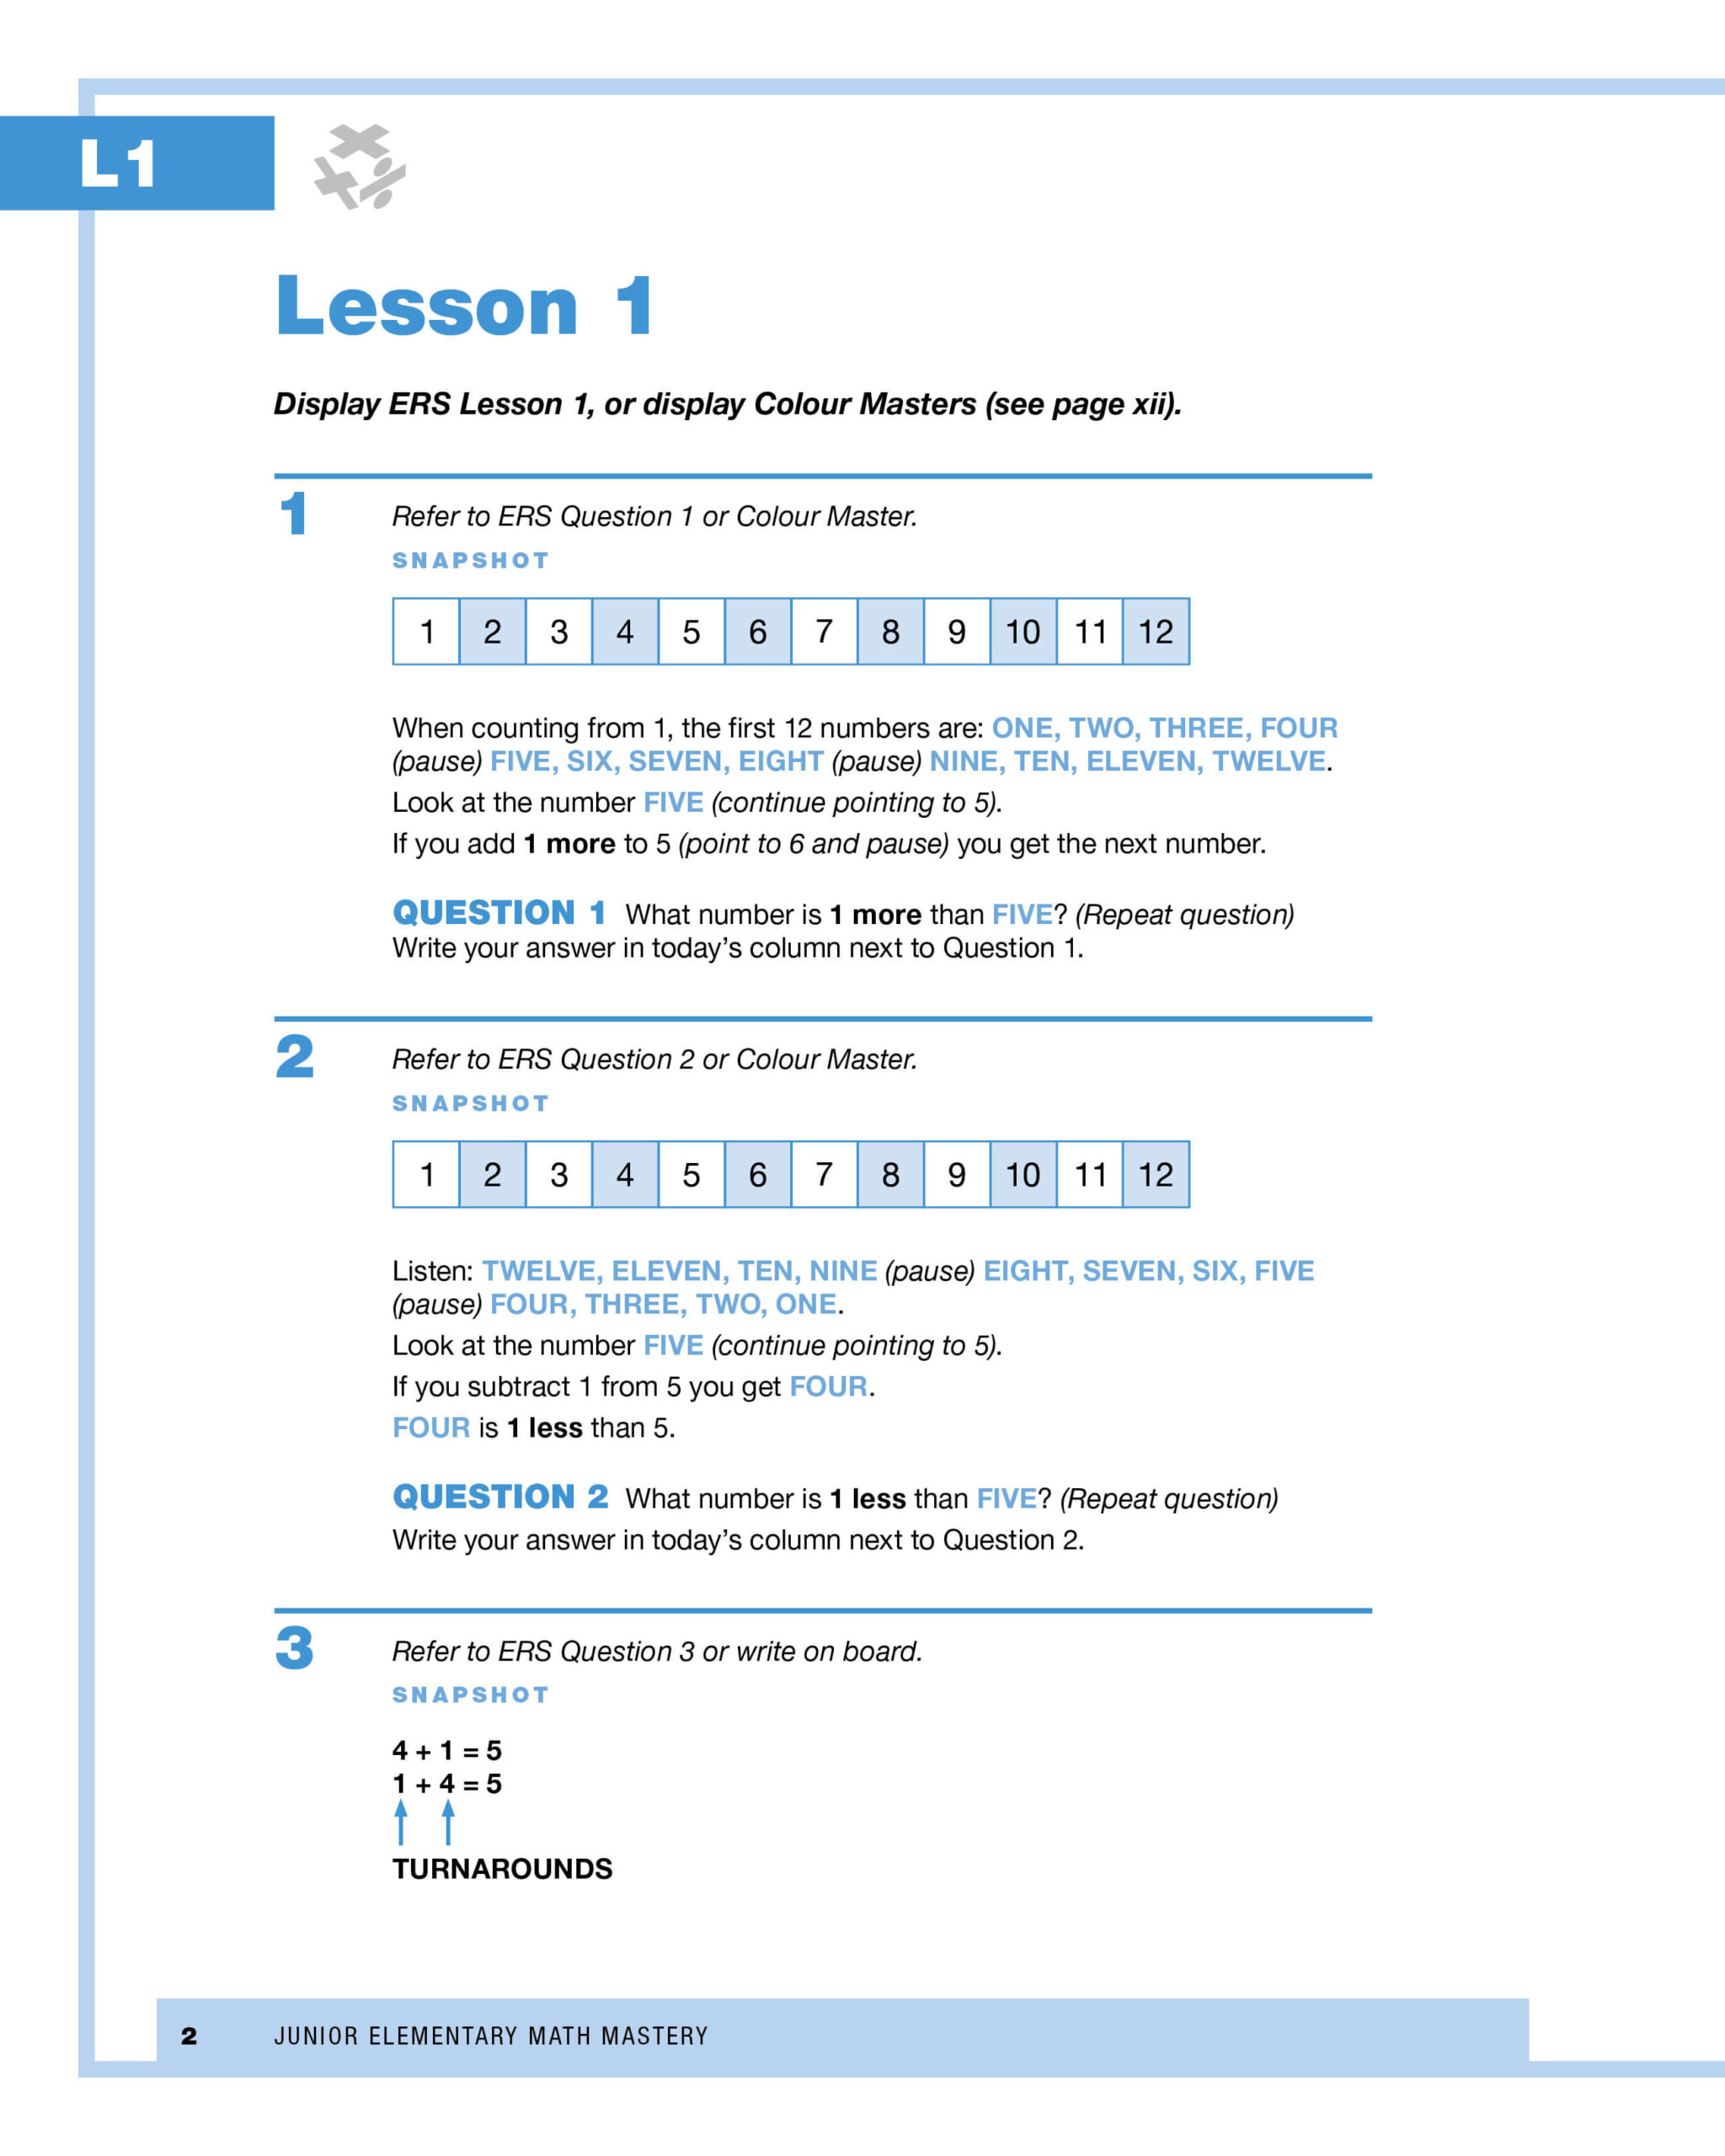 JEMM Lessons 1-5